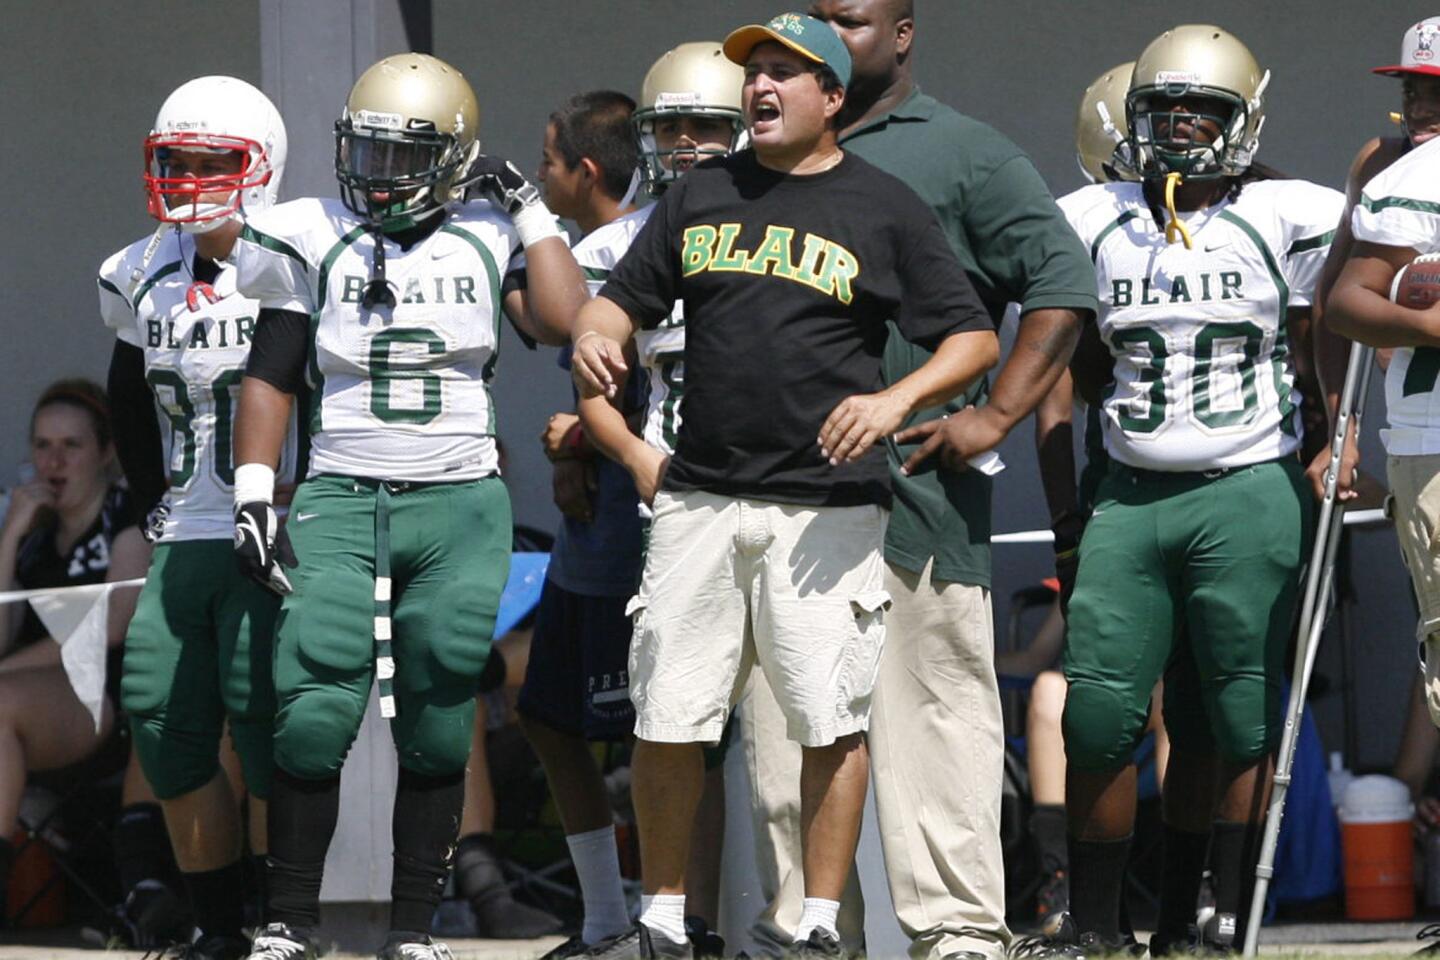 Blair's head coach Johnny Lopez yells at his team during a game against Pasadena Poly at Pasadena Poly on Saturday, September 8, 2012.